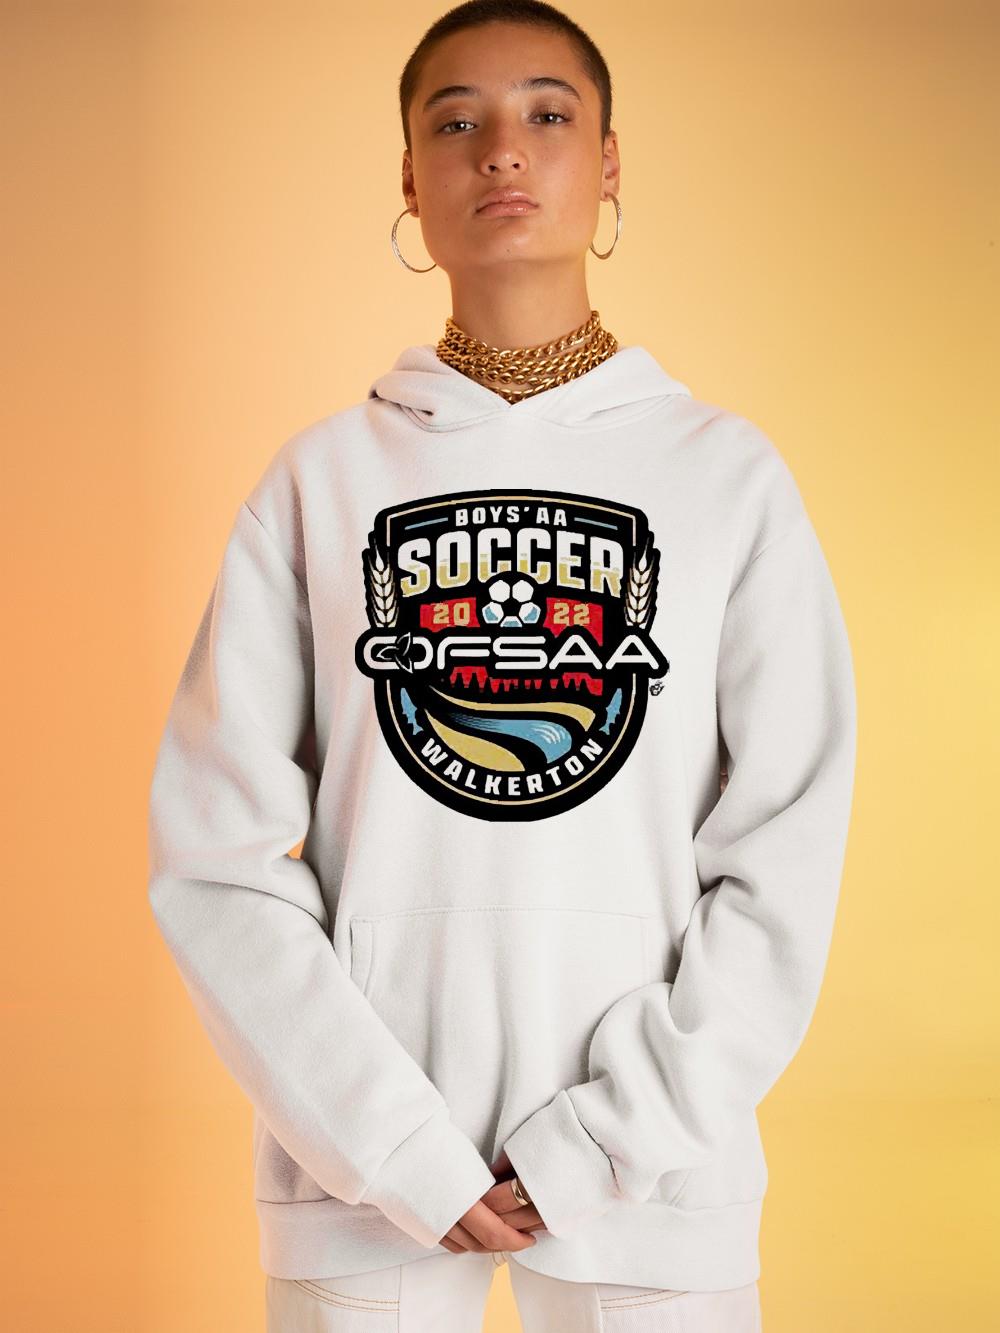 Boy’s AA Soccer 2022 Walkerton logo shirt